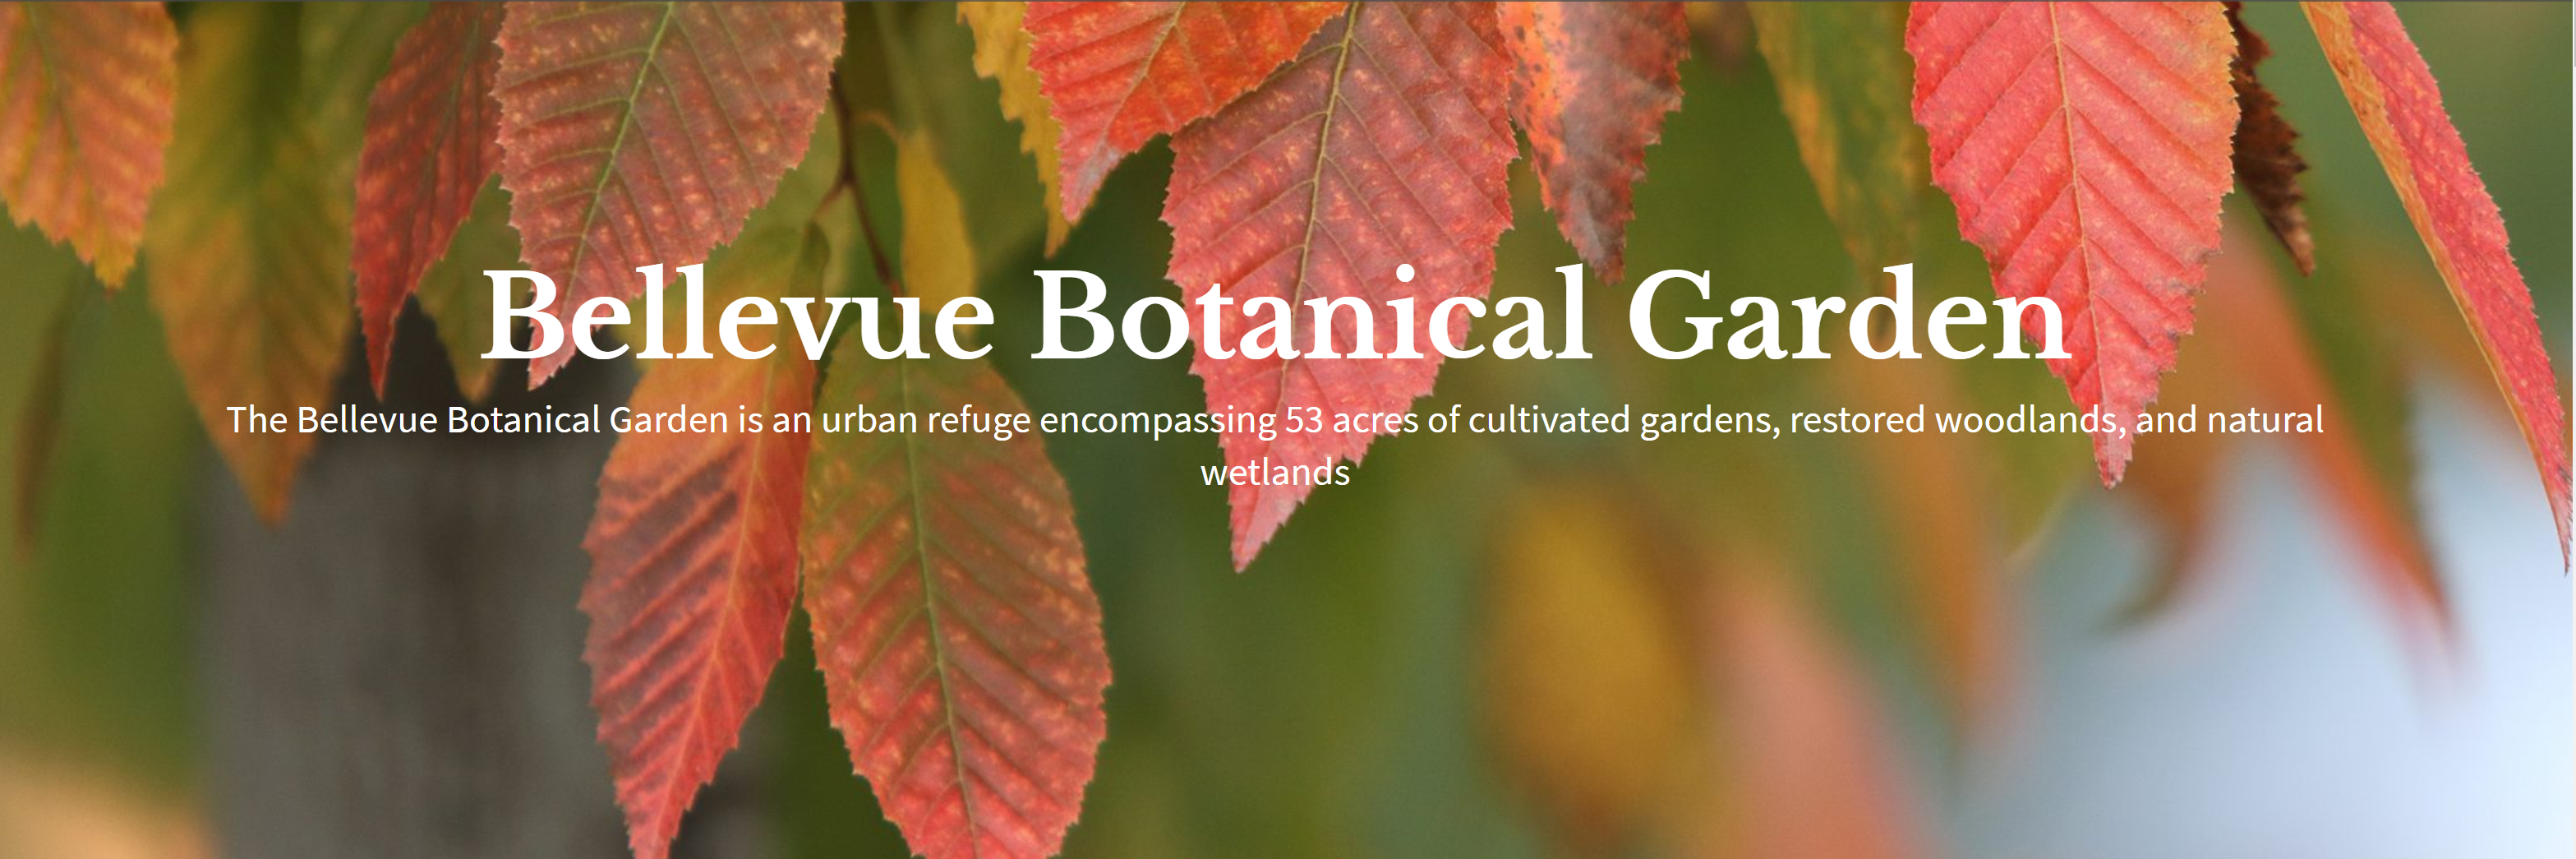 Botanical Garden Home Page